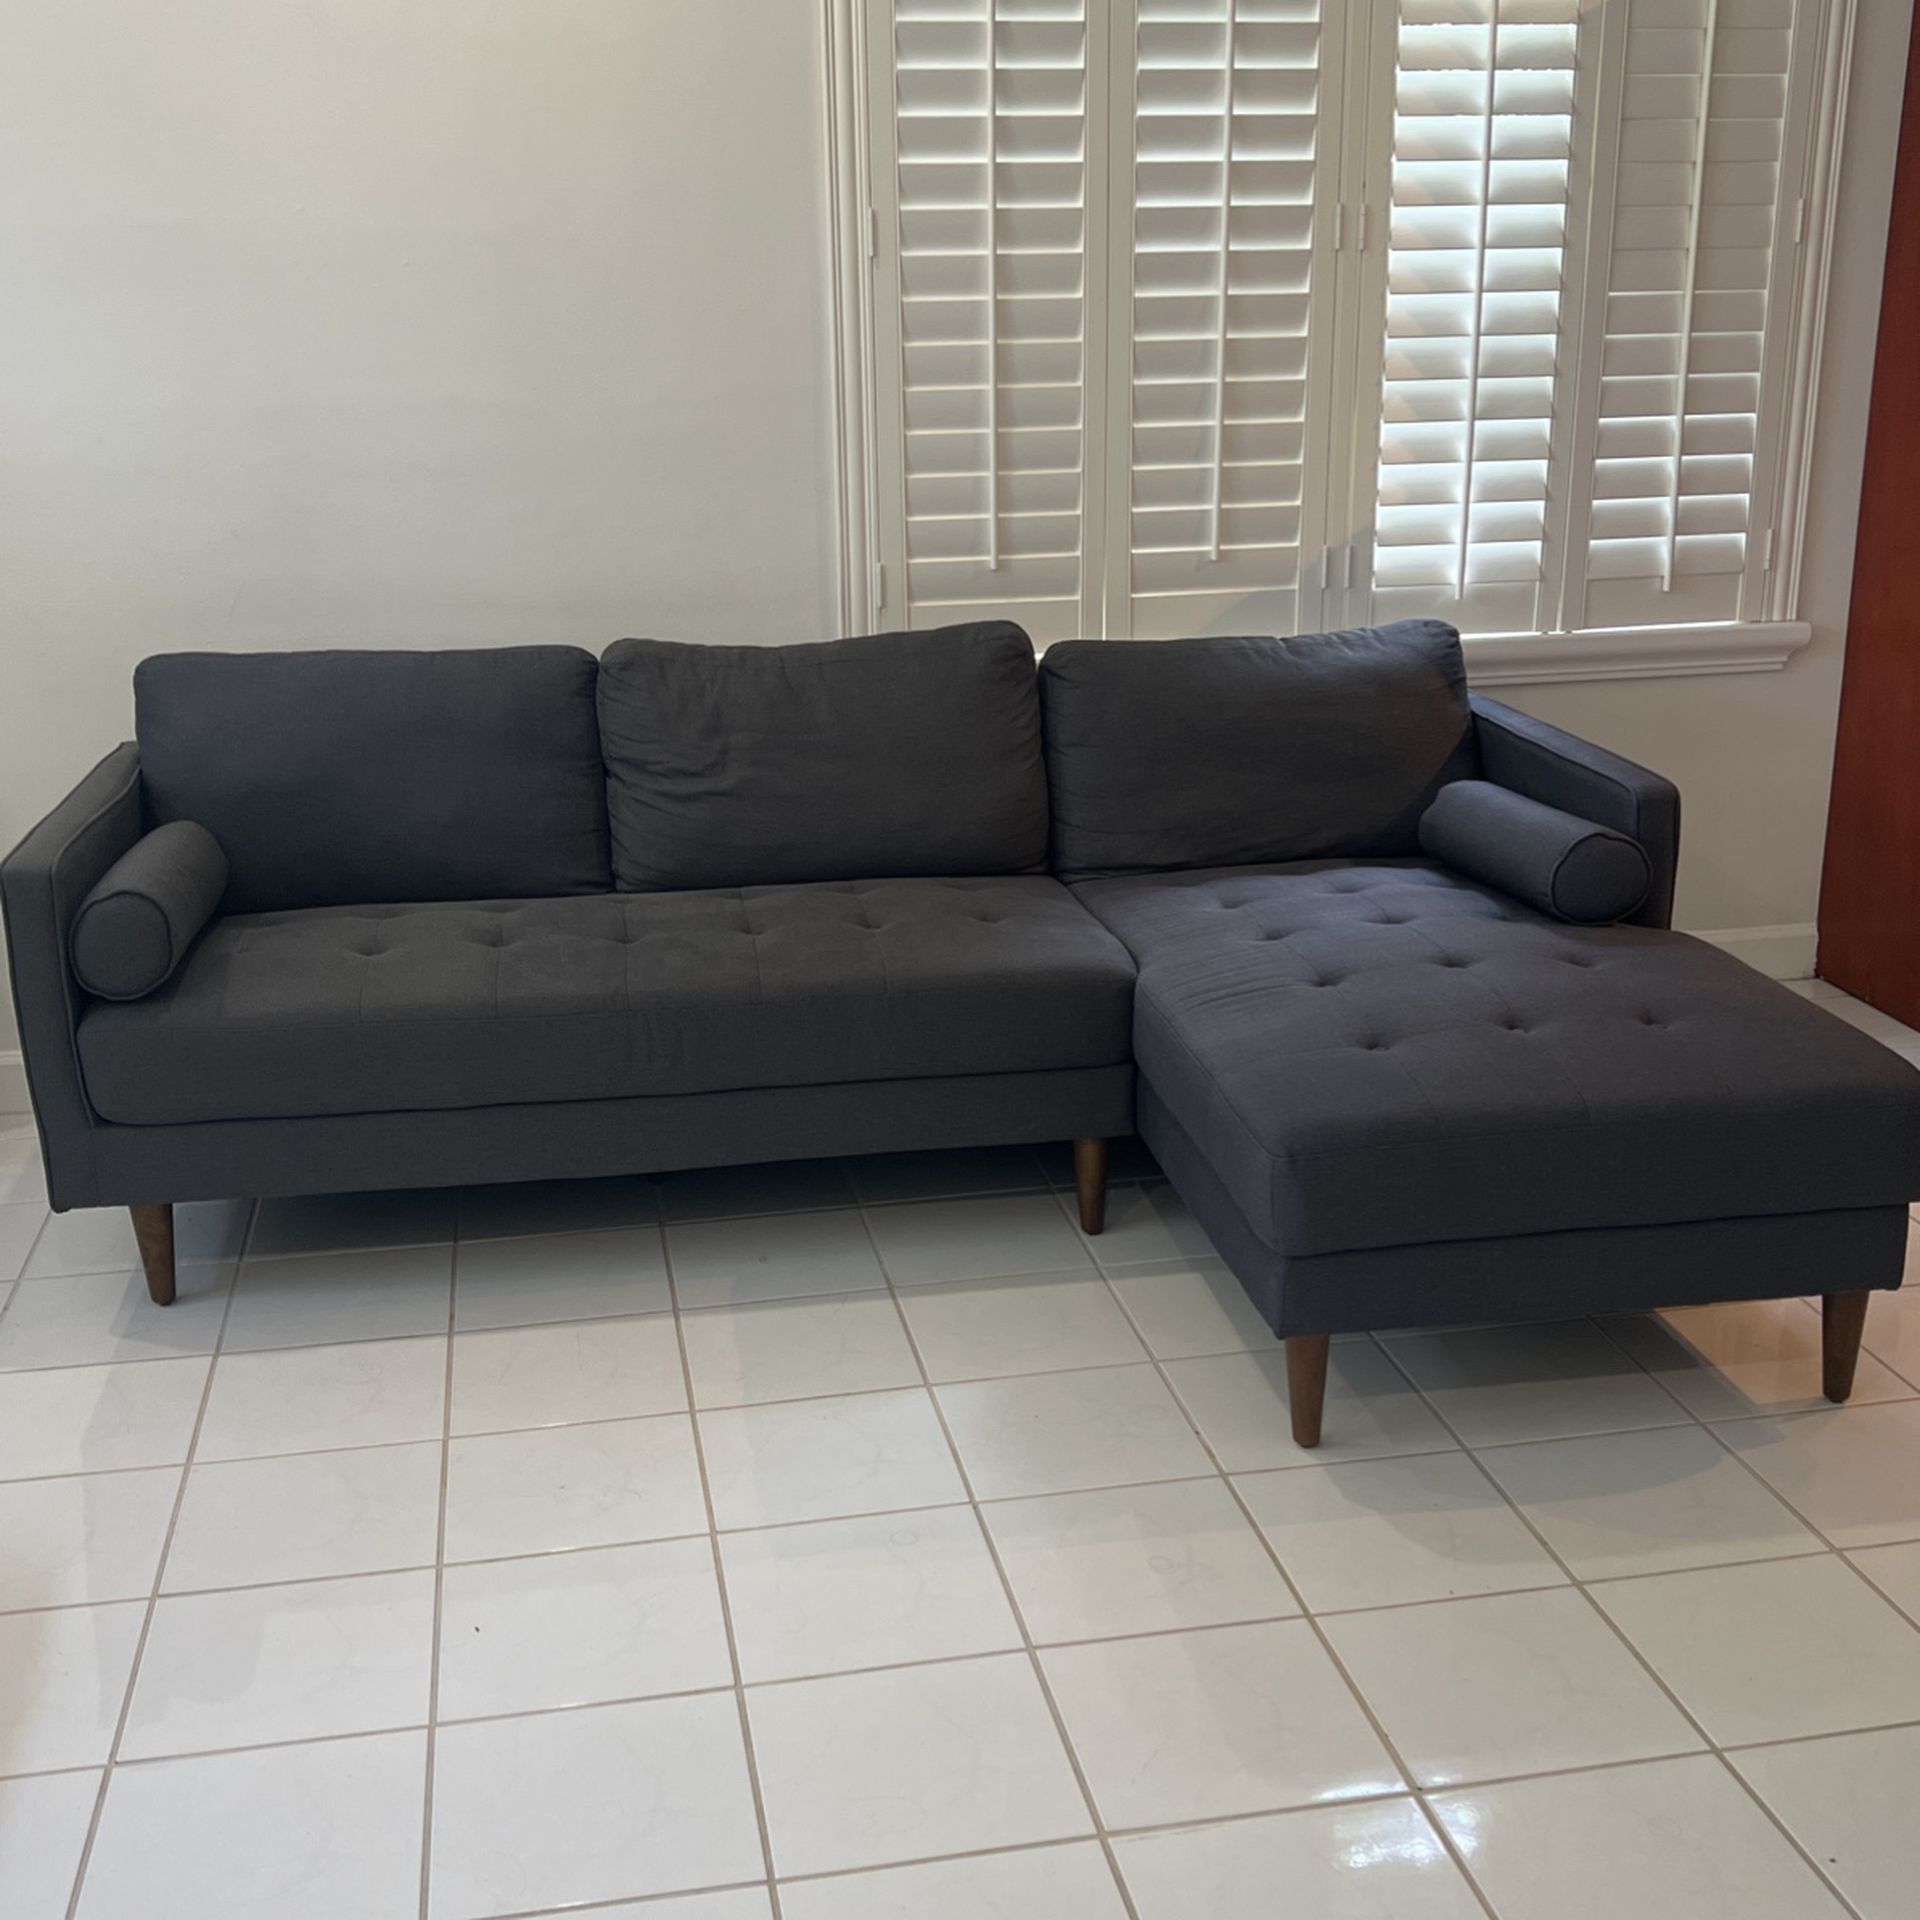 Fabric Sofa - Chaise 